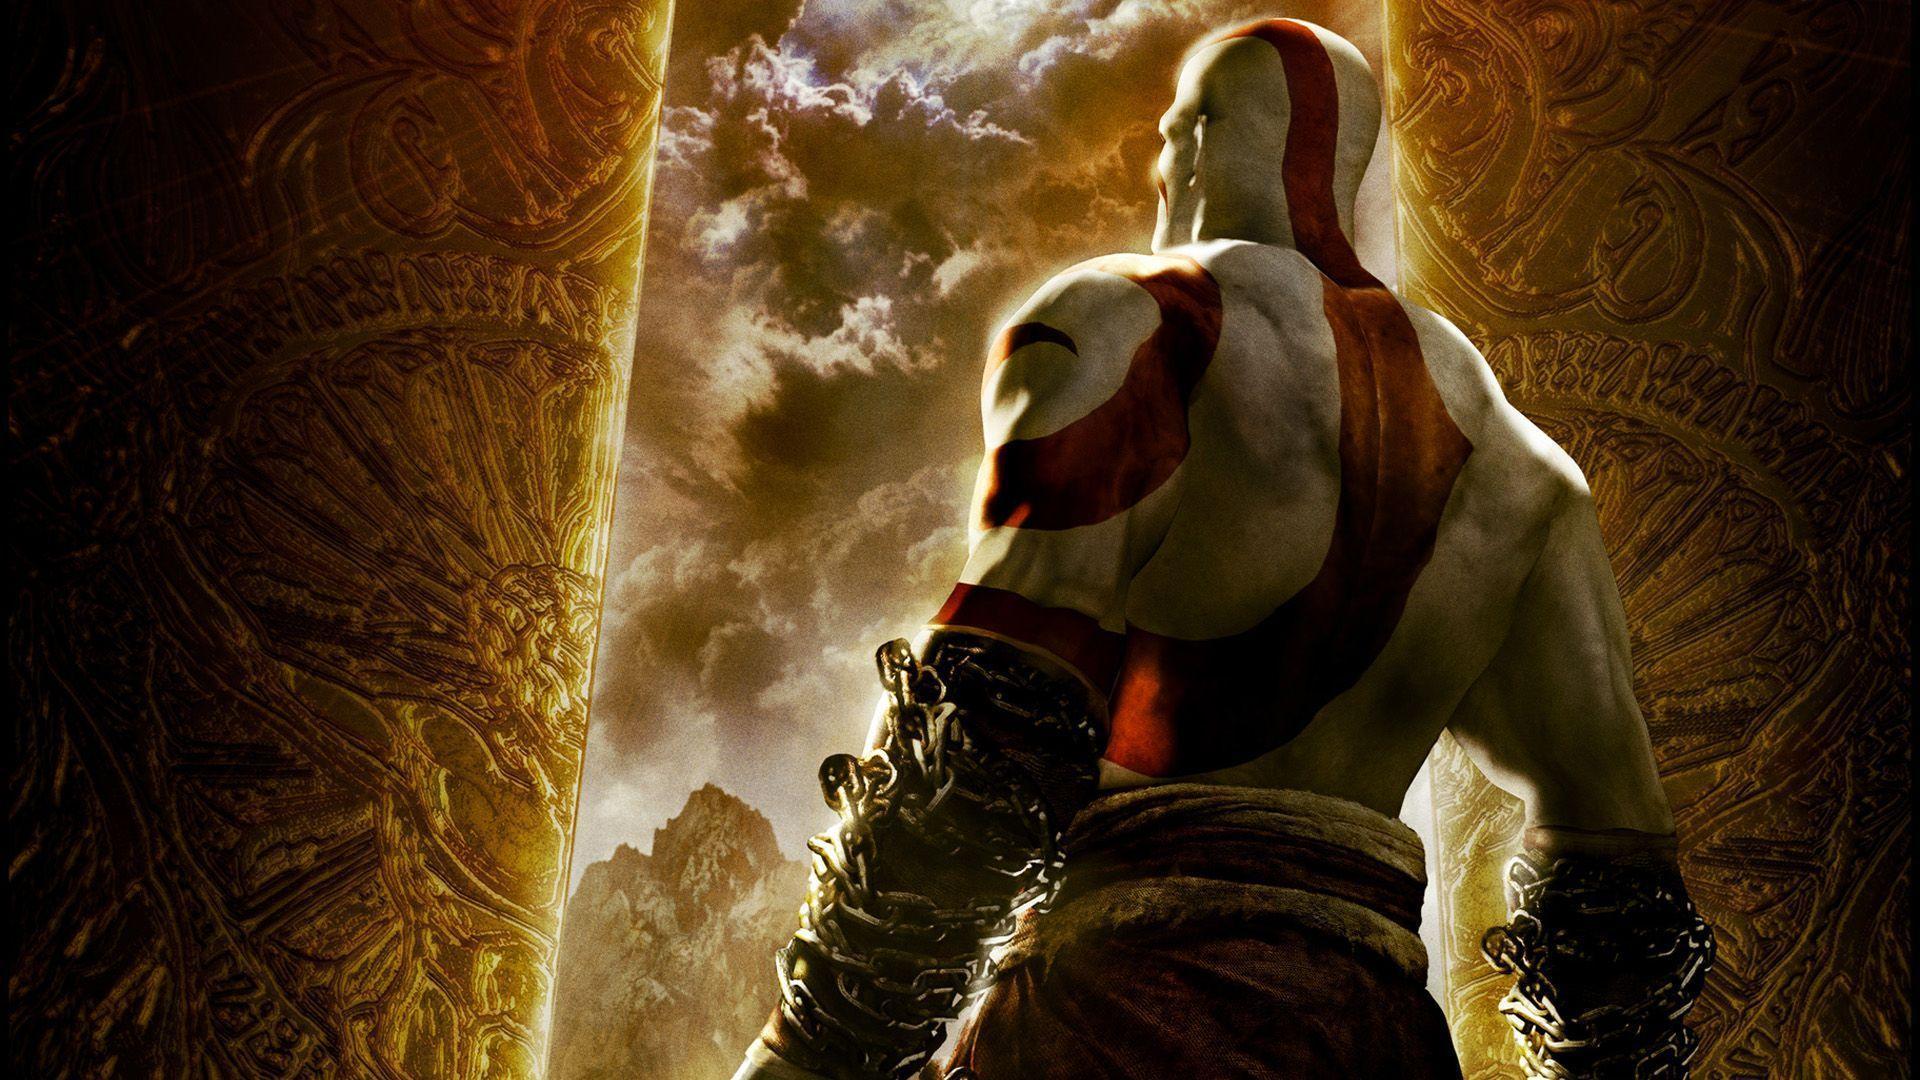 Free Download God Of War 3 Wallpaper